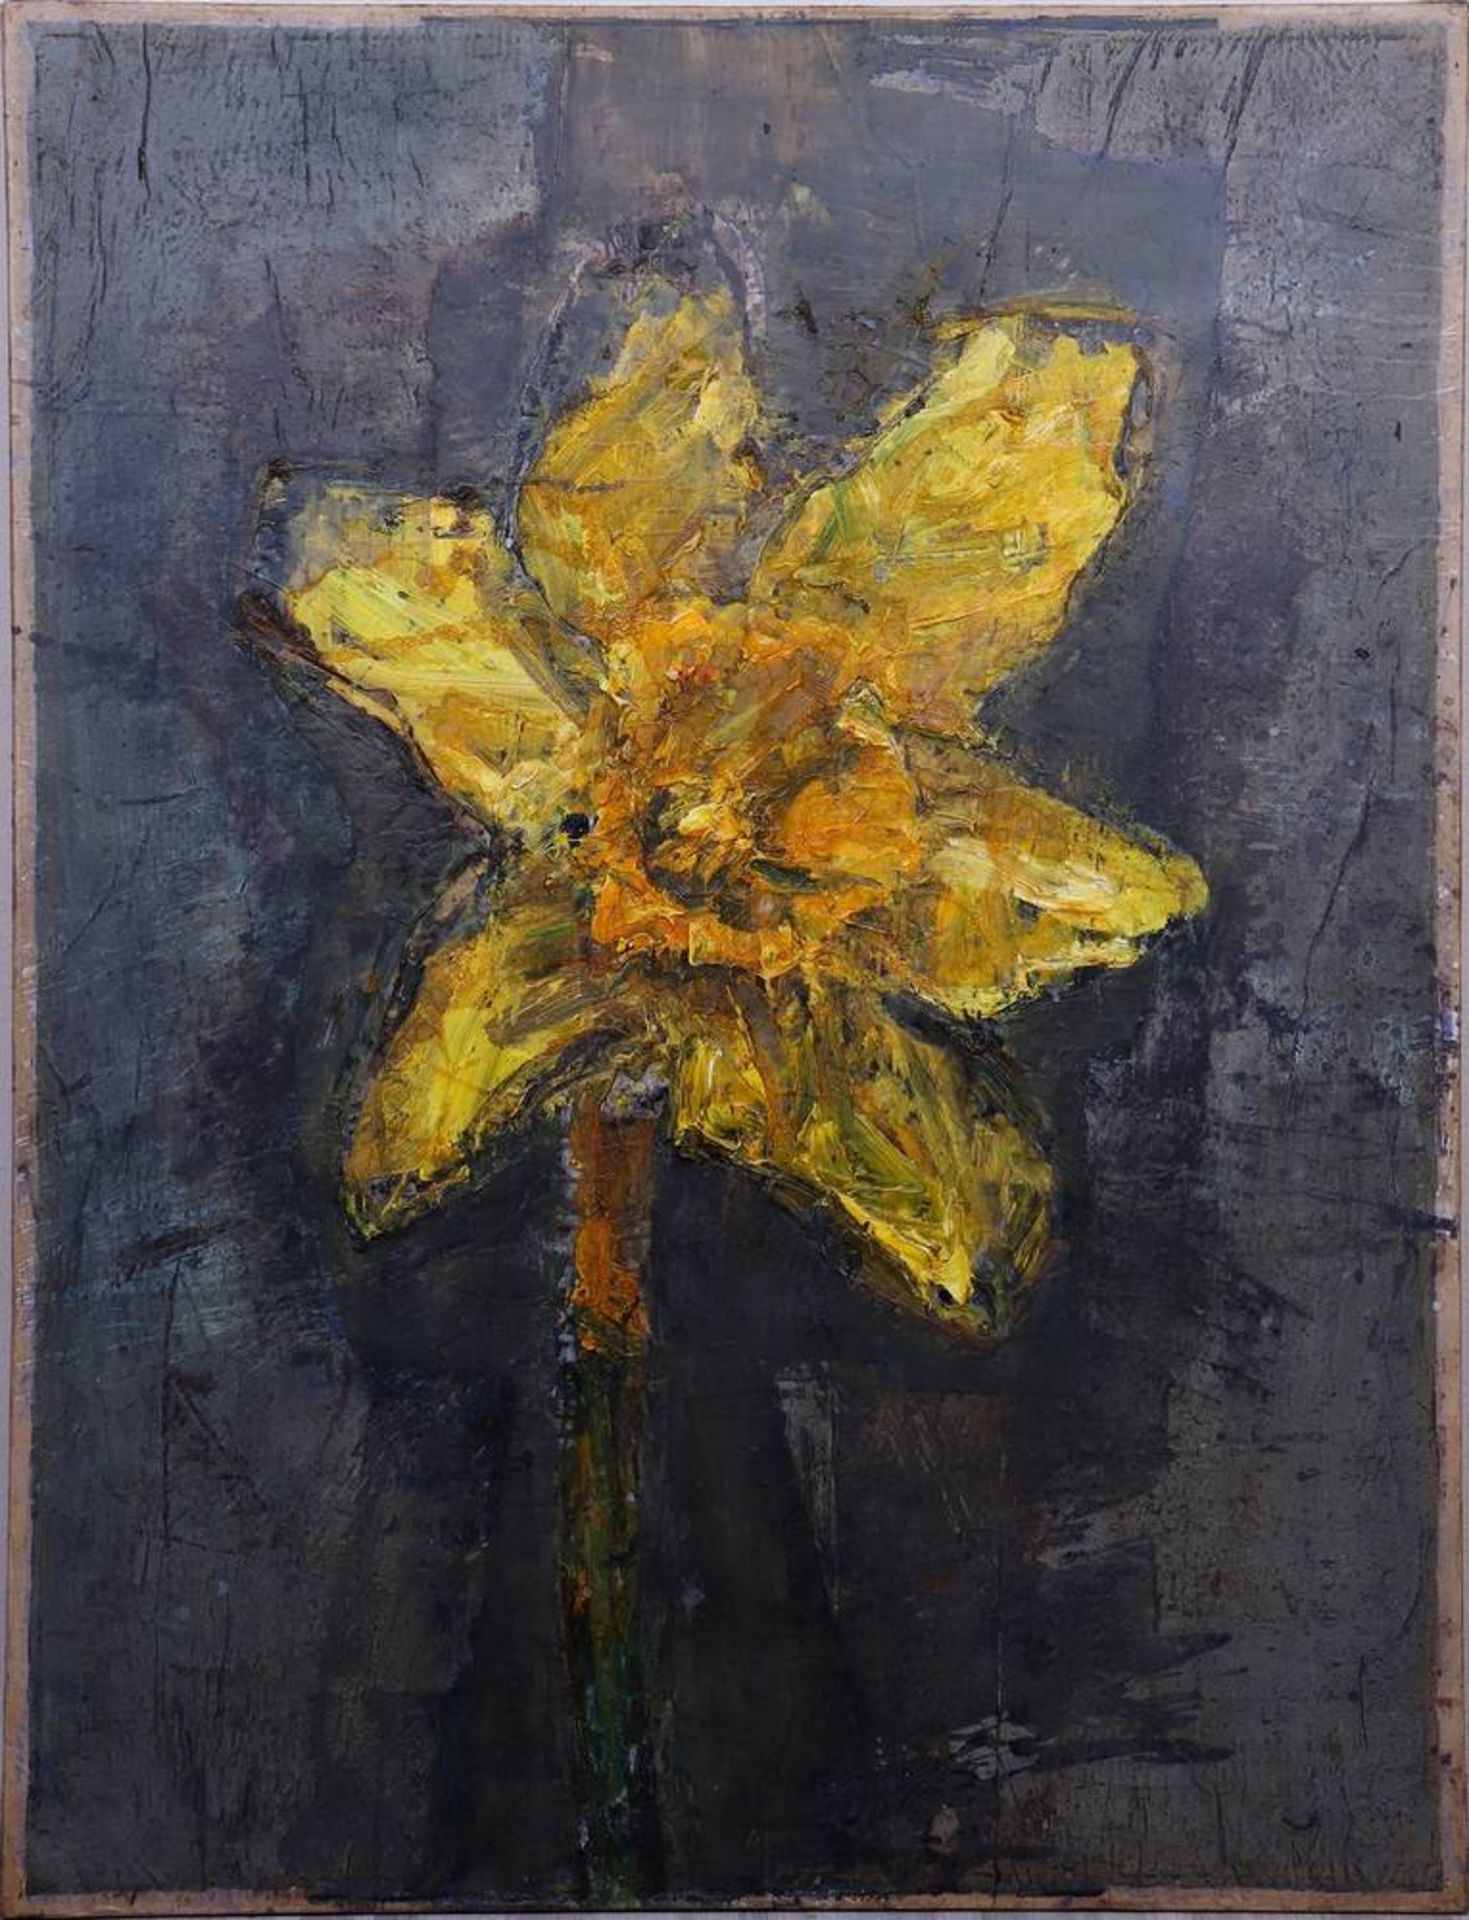 Erasmus Zipfel (b. 1955, Breslau, Lübeck artist)"Narzisse" (daffodil), 1991, oil/resin/canvas, verso